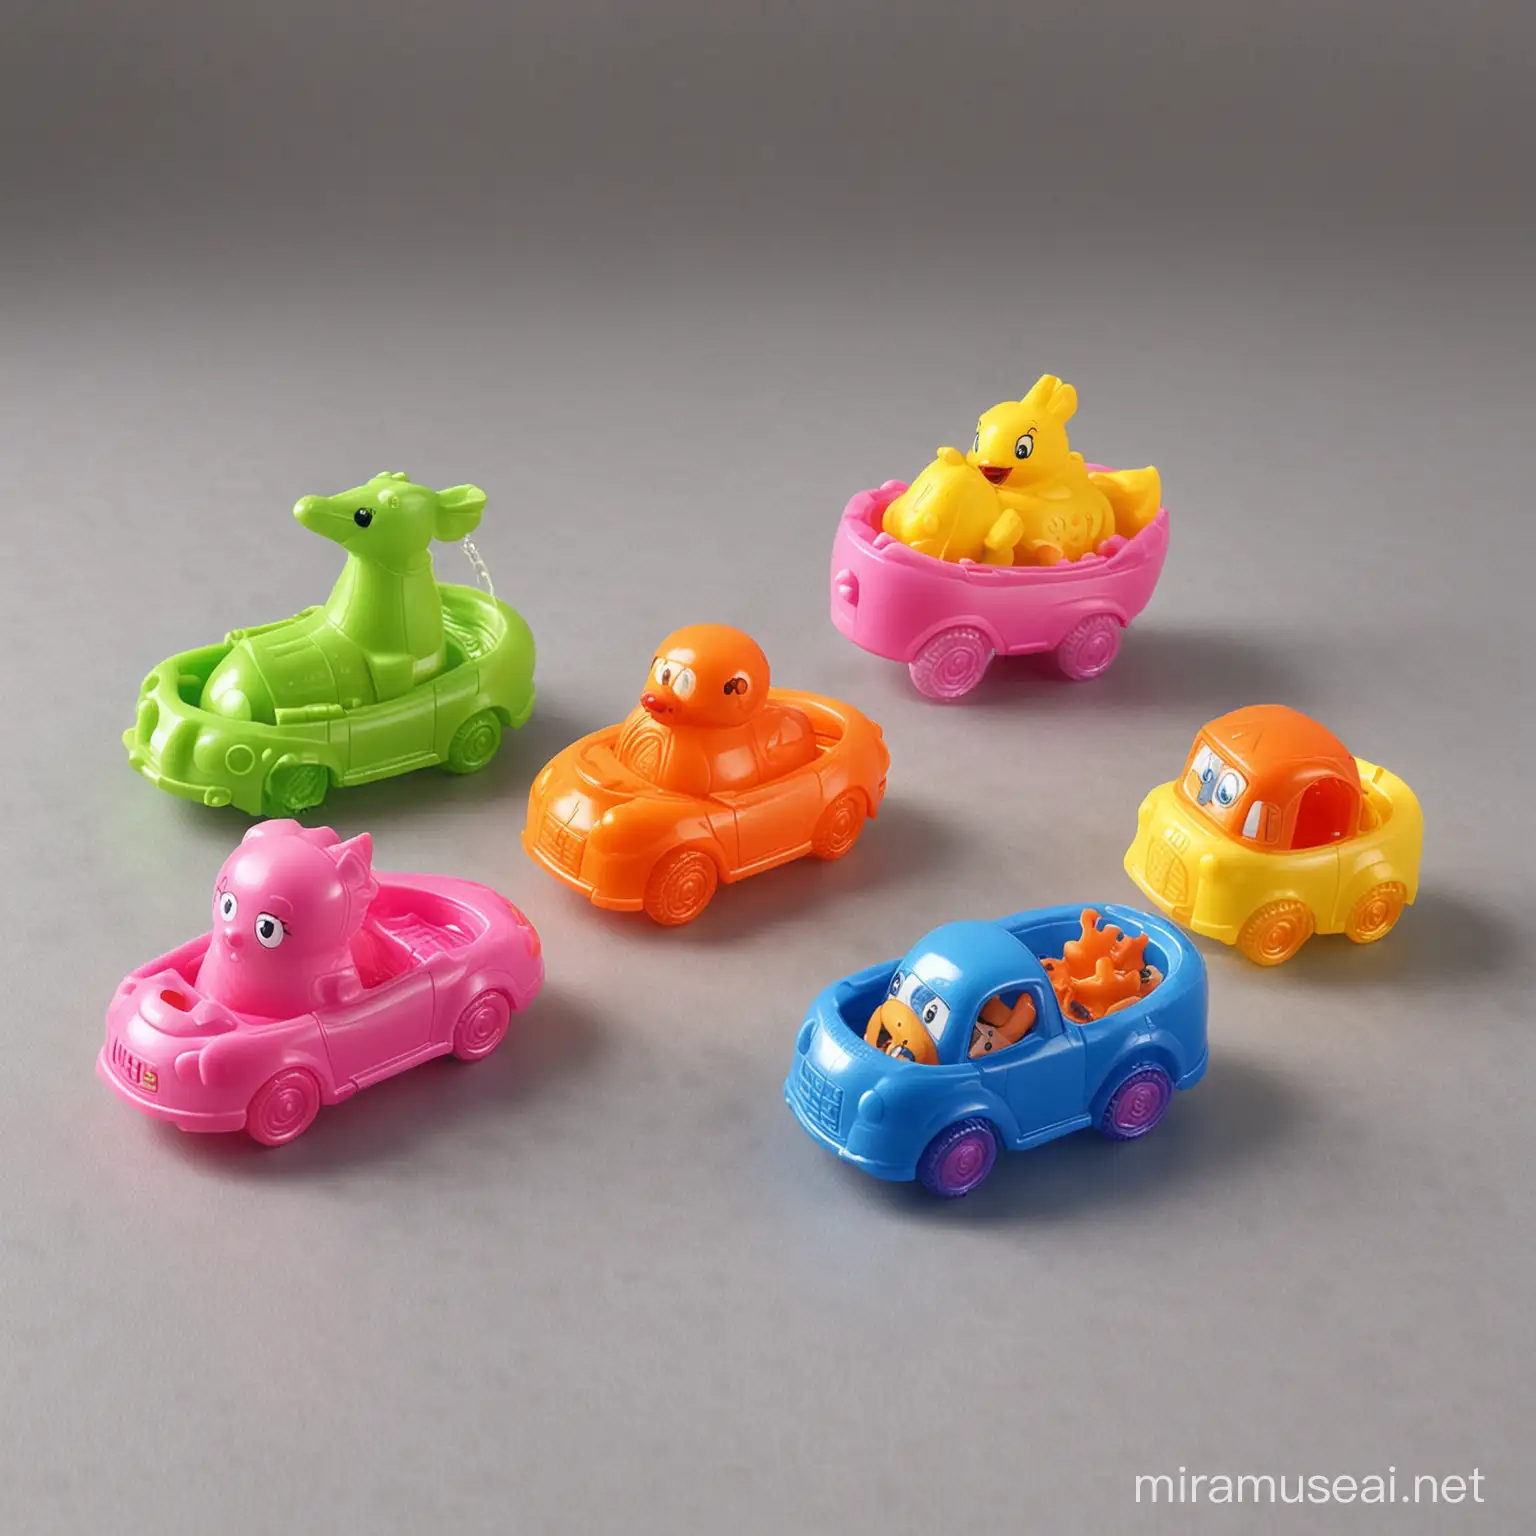 bath plastic toys

